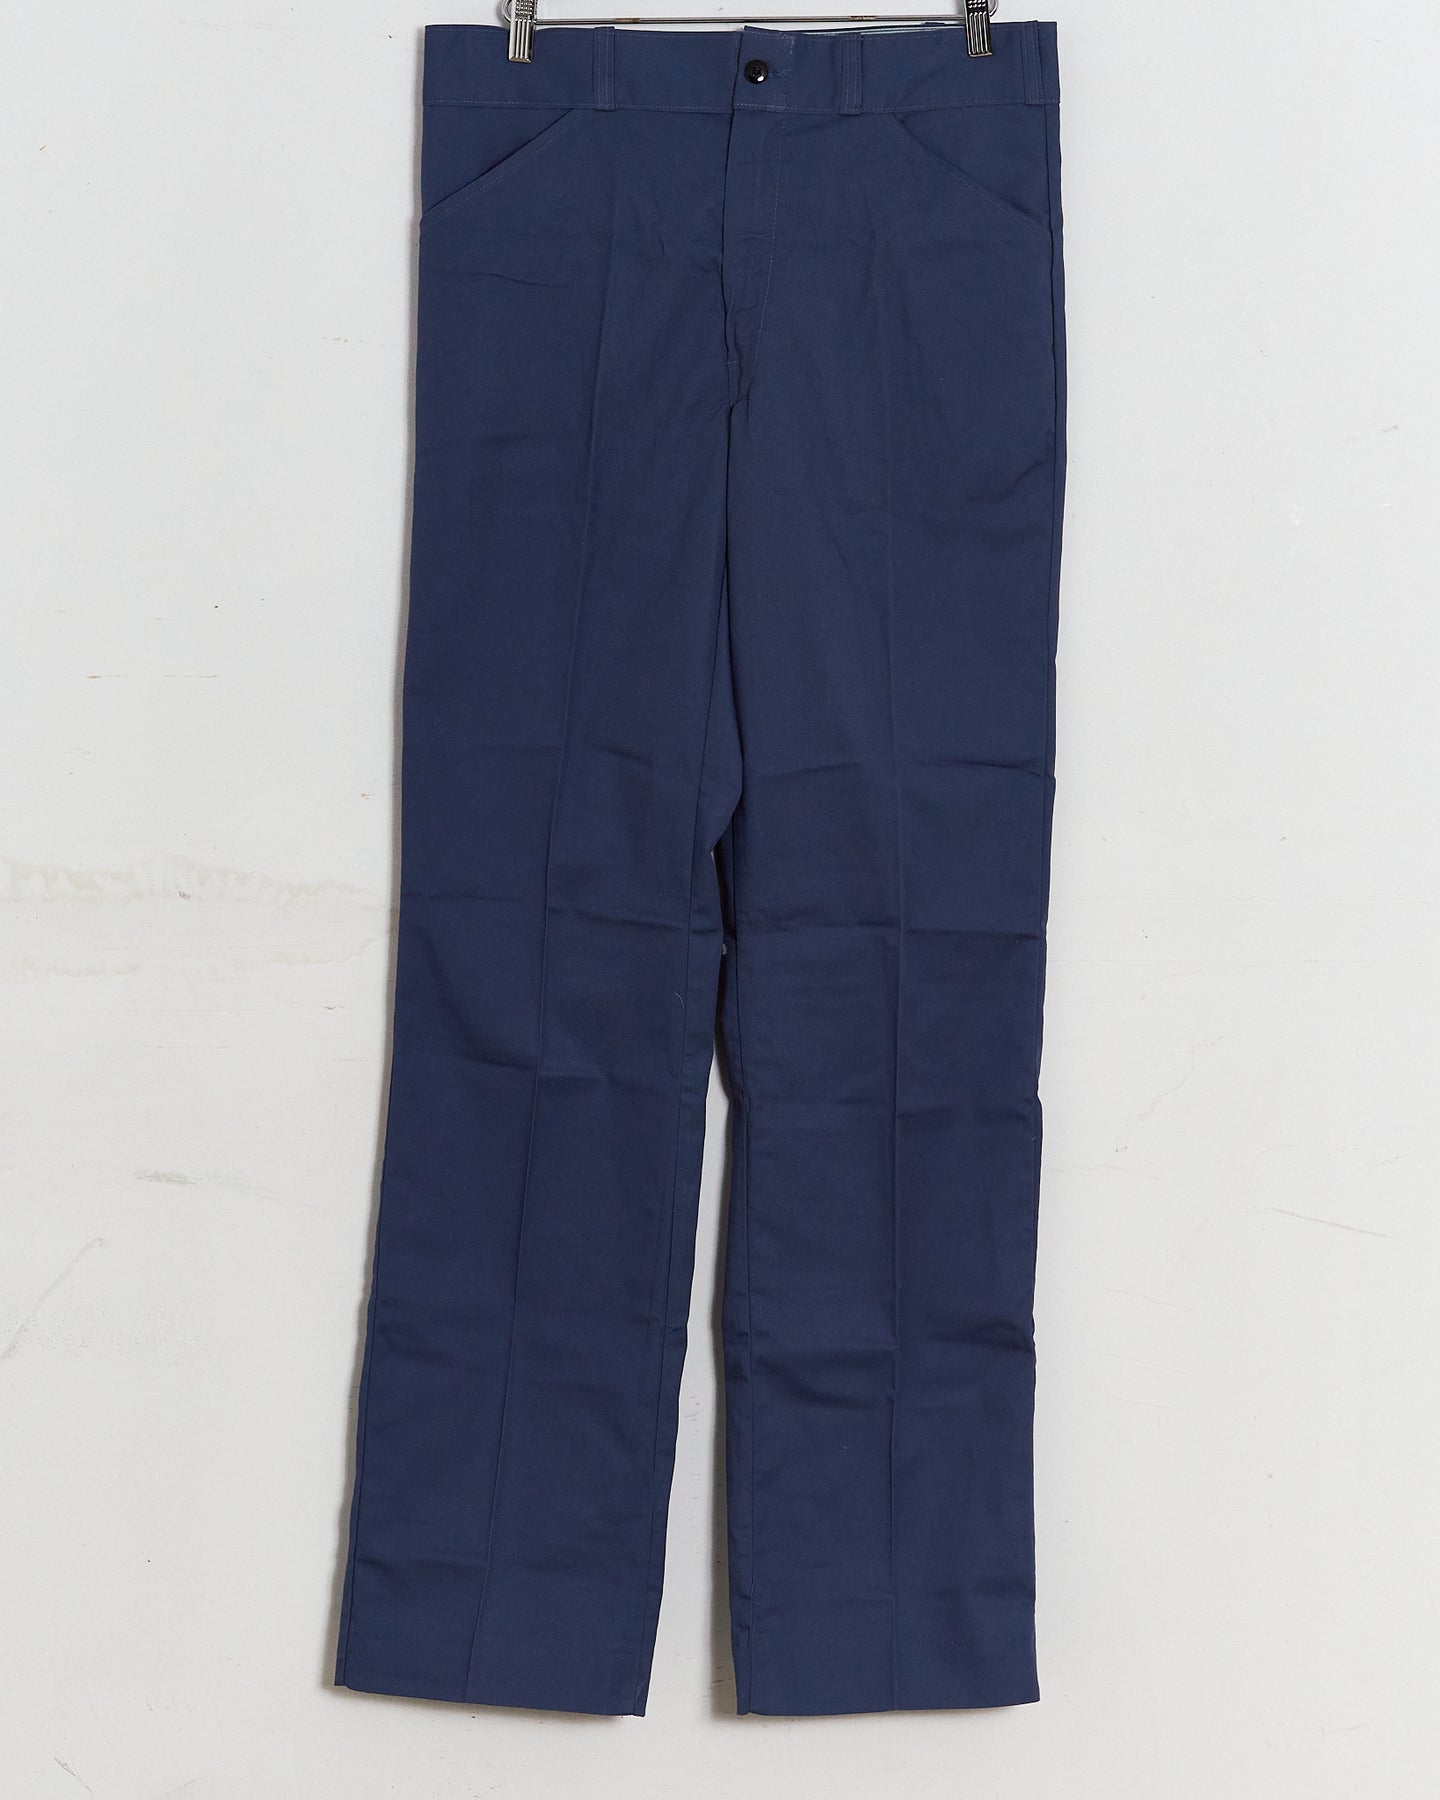 1970s/80s Work Trousers - 35x36 - Deadstock